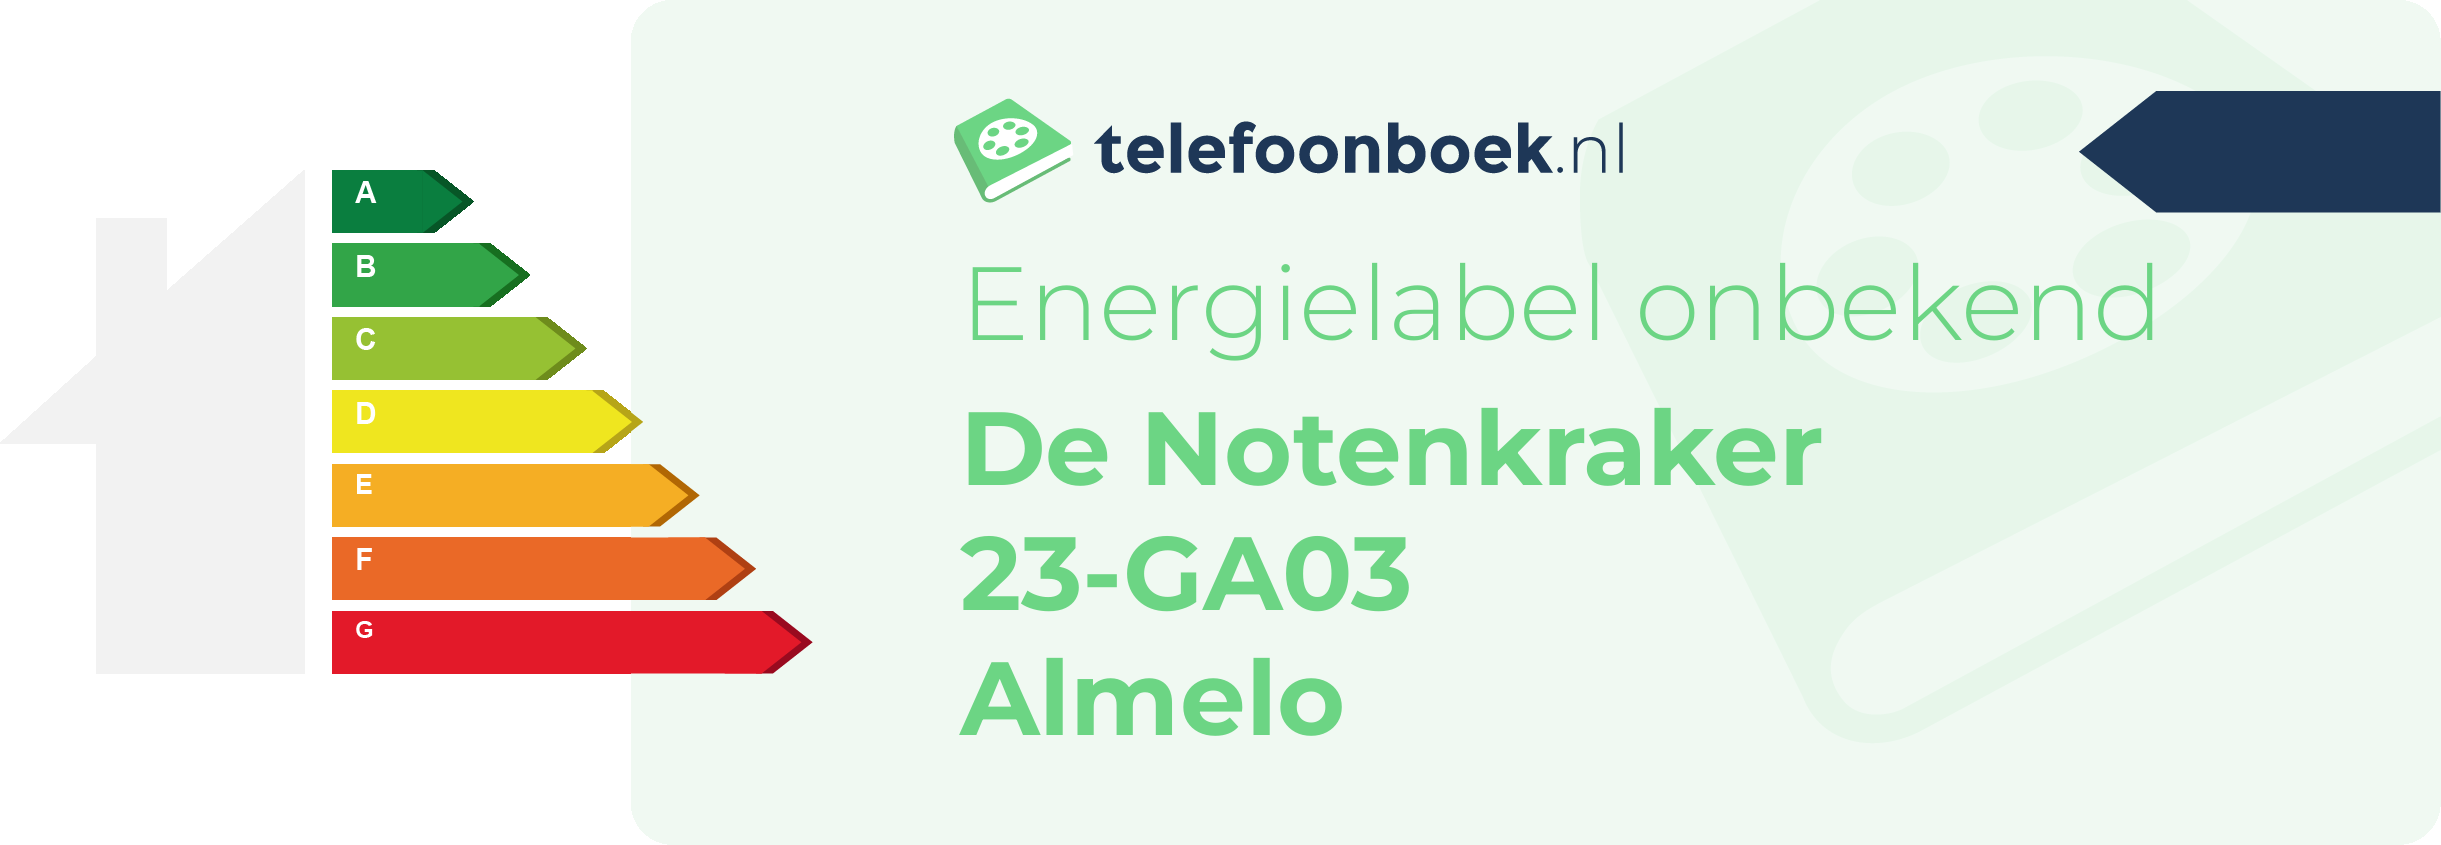 Energielabel De Notenkraker 23-GA03 Almelo